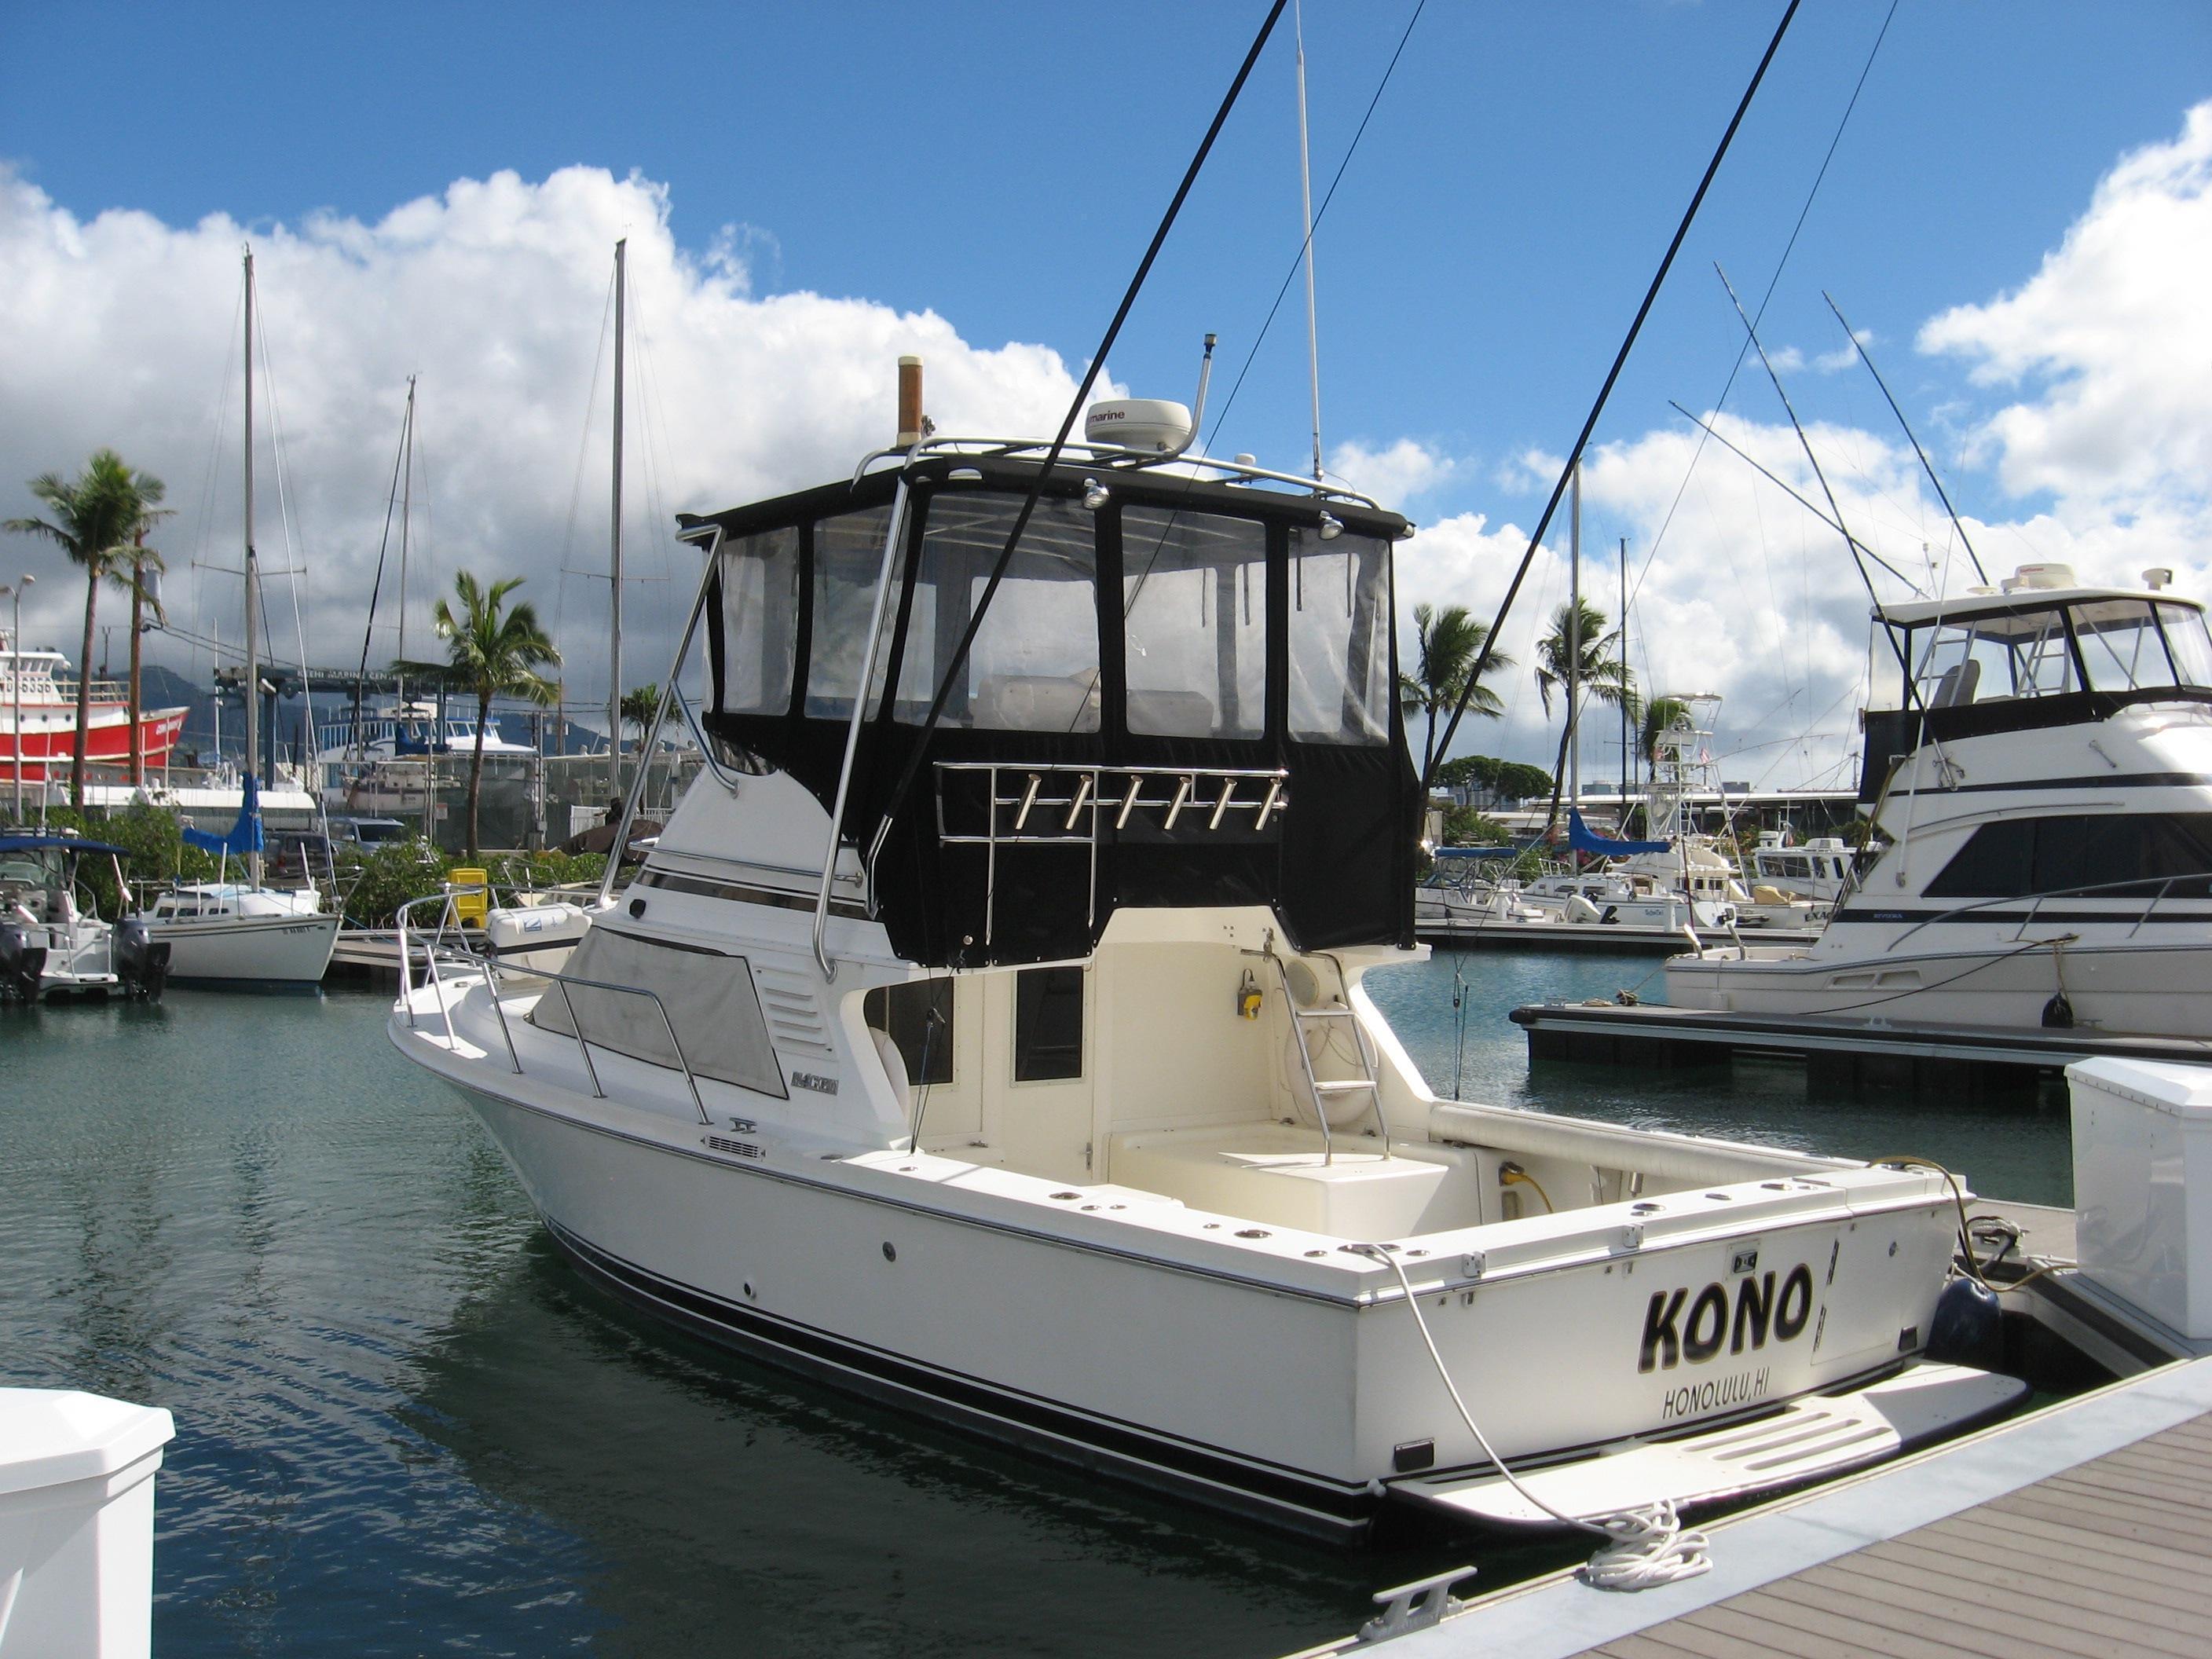 Blackfin 33, Honolulu